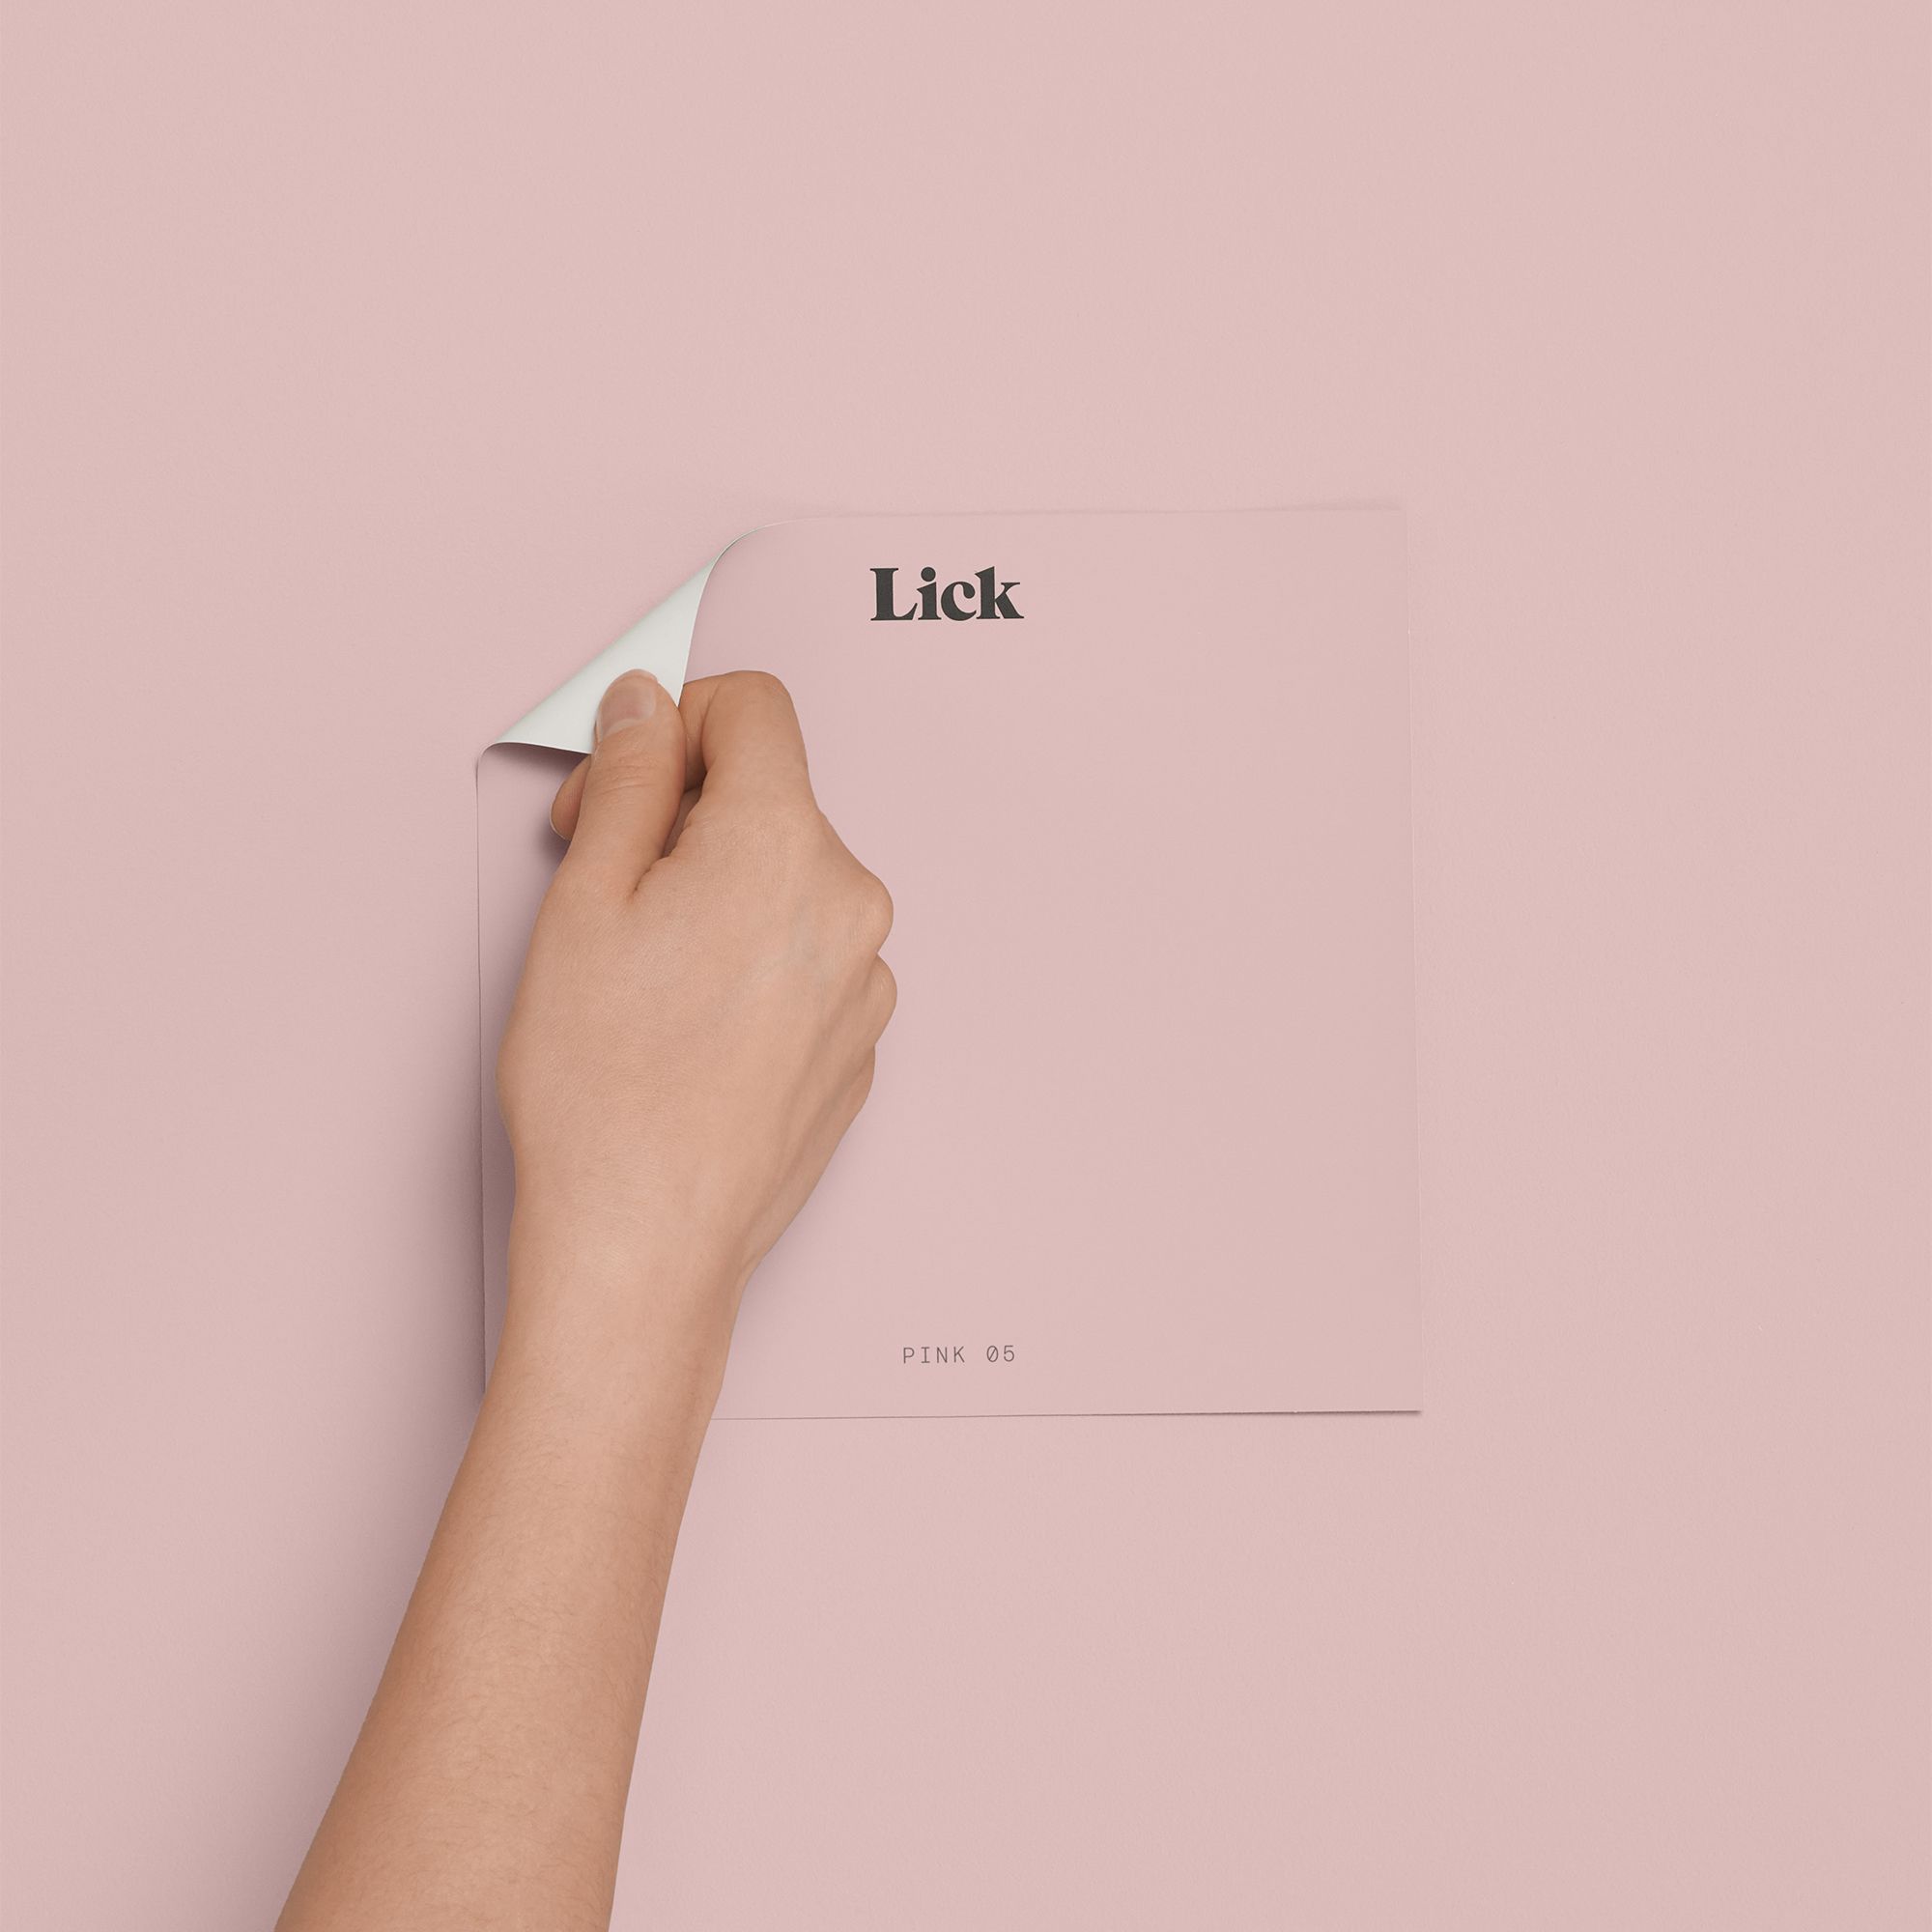 Lick Pink 05 Peel & stick Tester